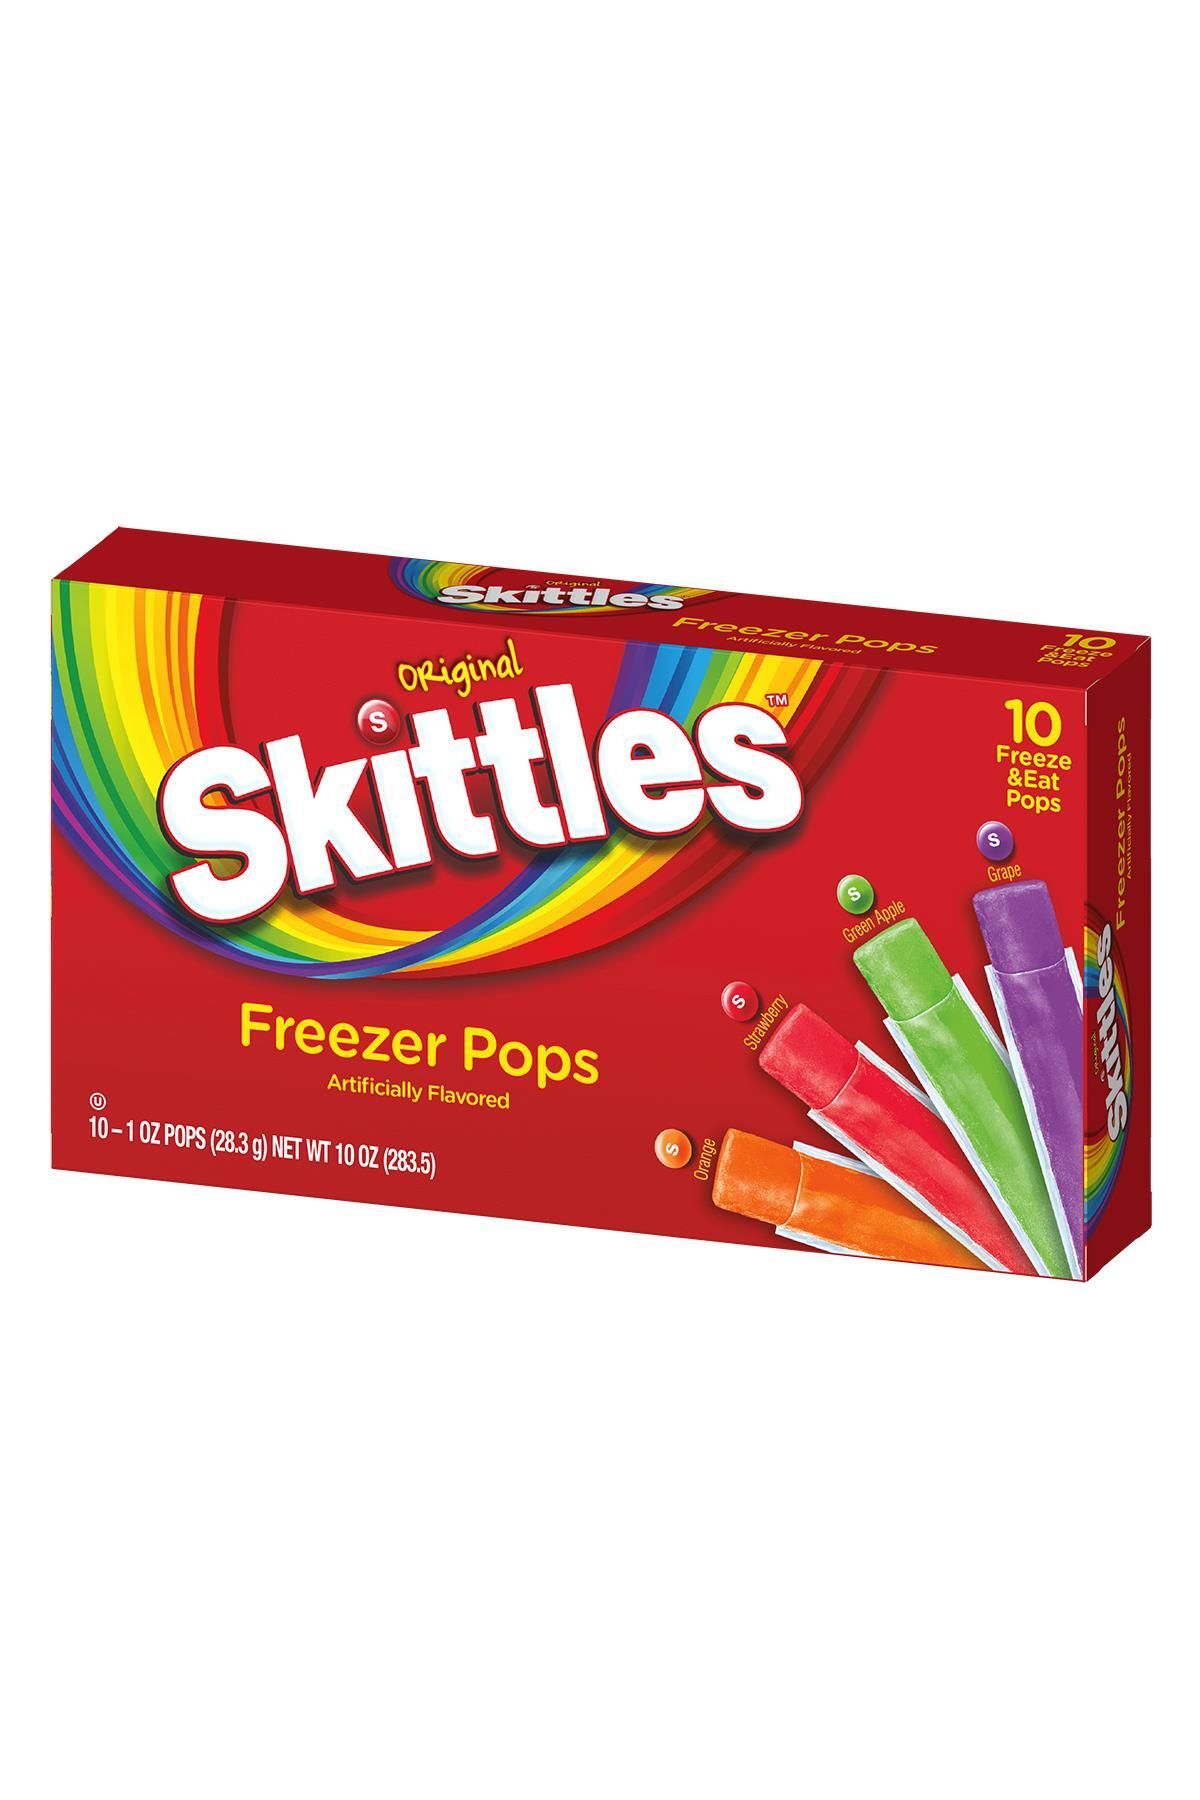 Skittles Freezer Pops 10 Freeze & Eat Pops